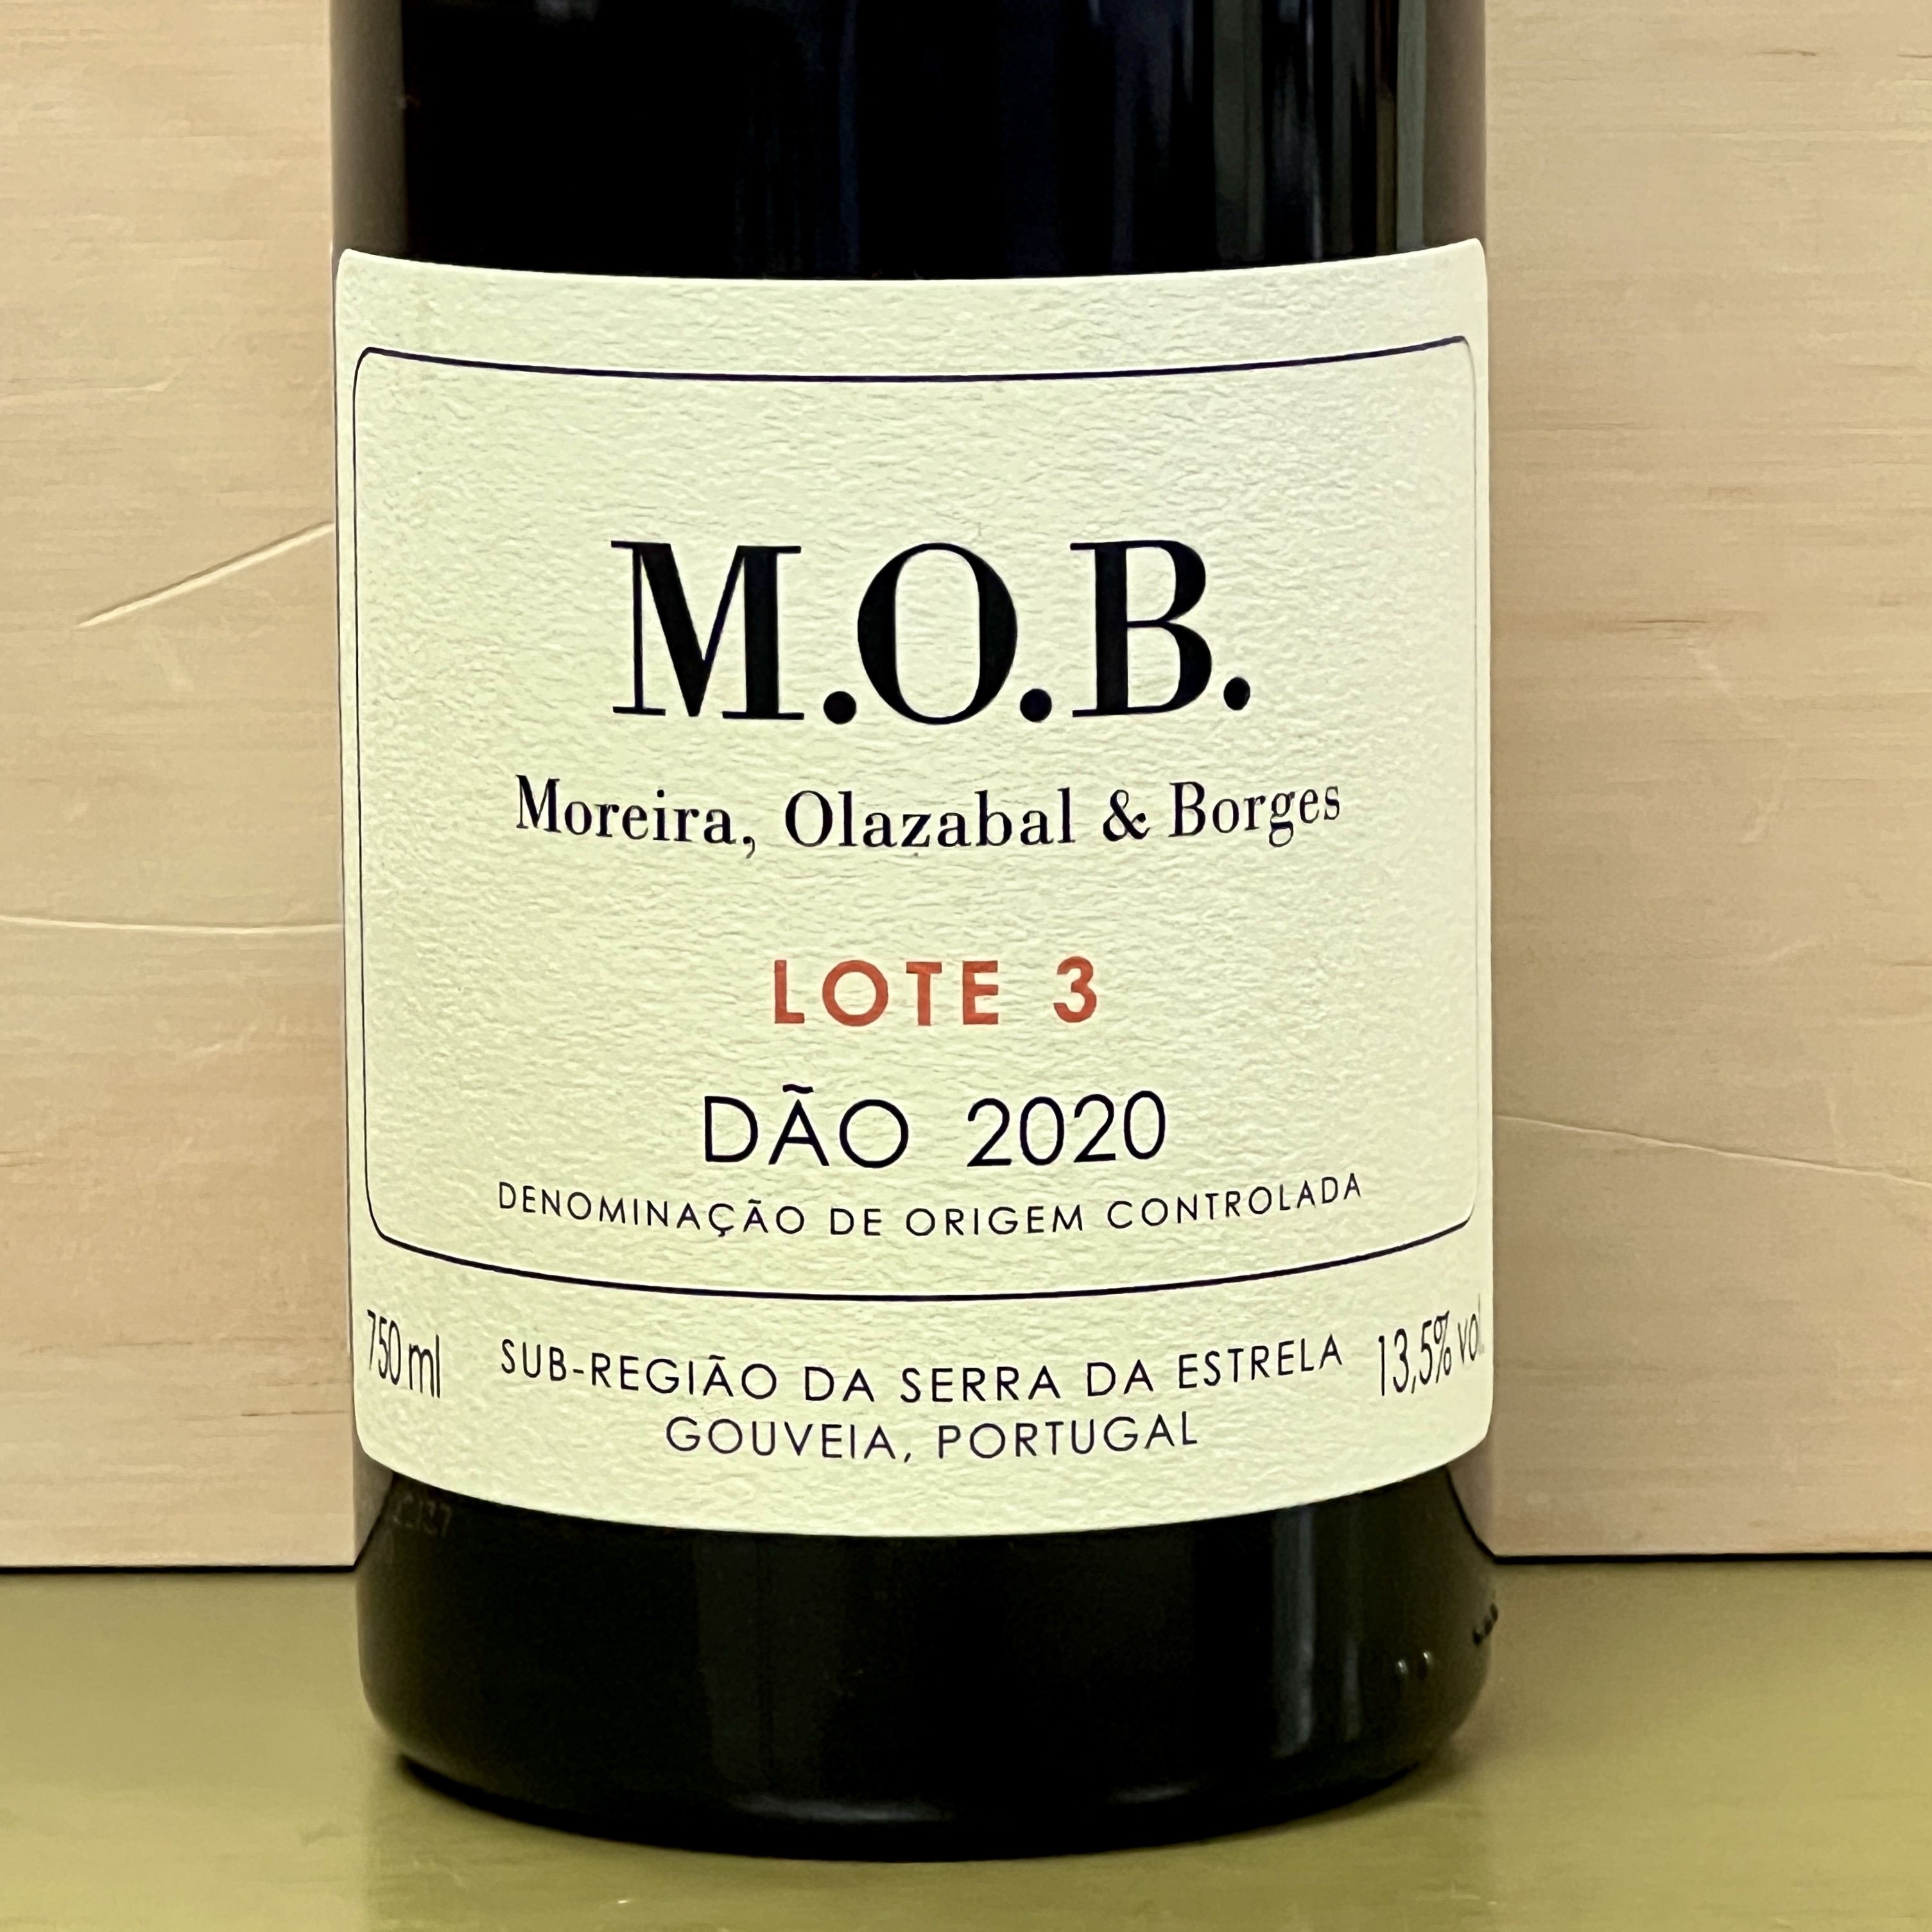 M.O.B. Lot 3 Tinto red blend Dao 2020